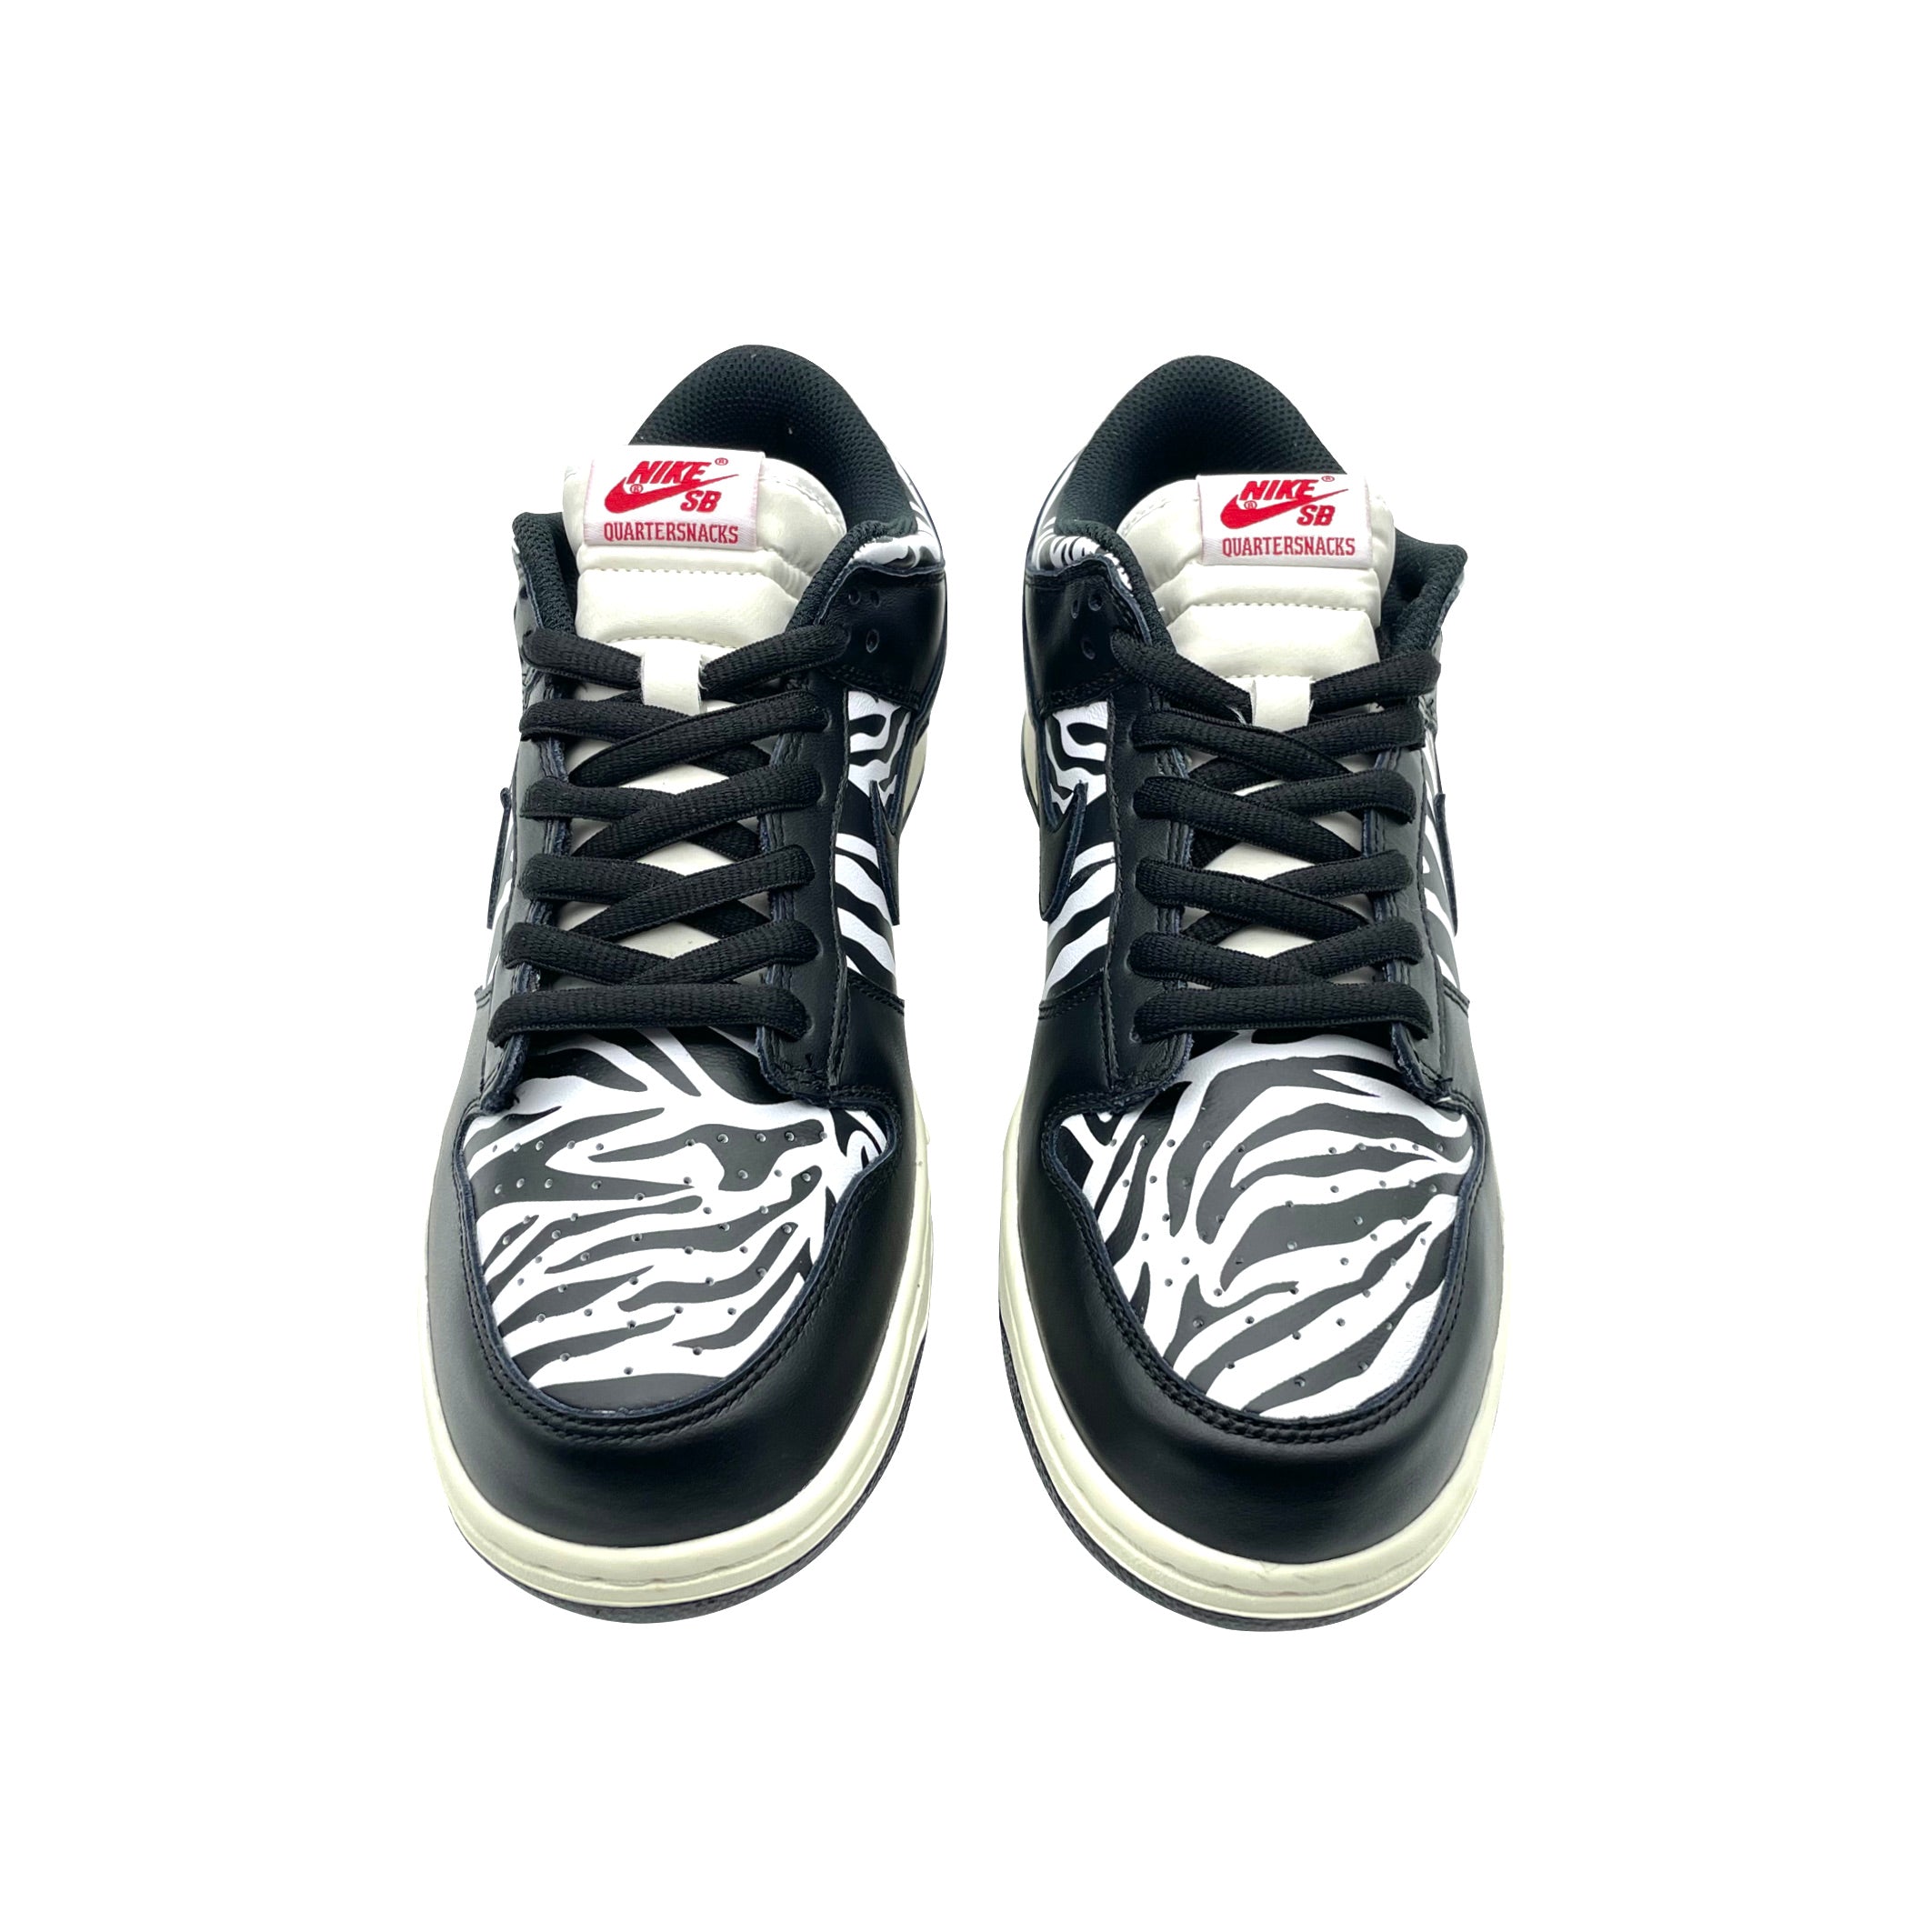 Nike SB Dunk Low Quartersnacks Zebra